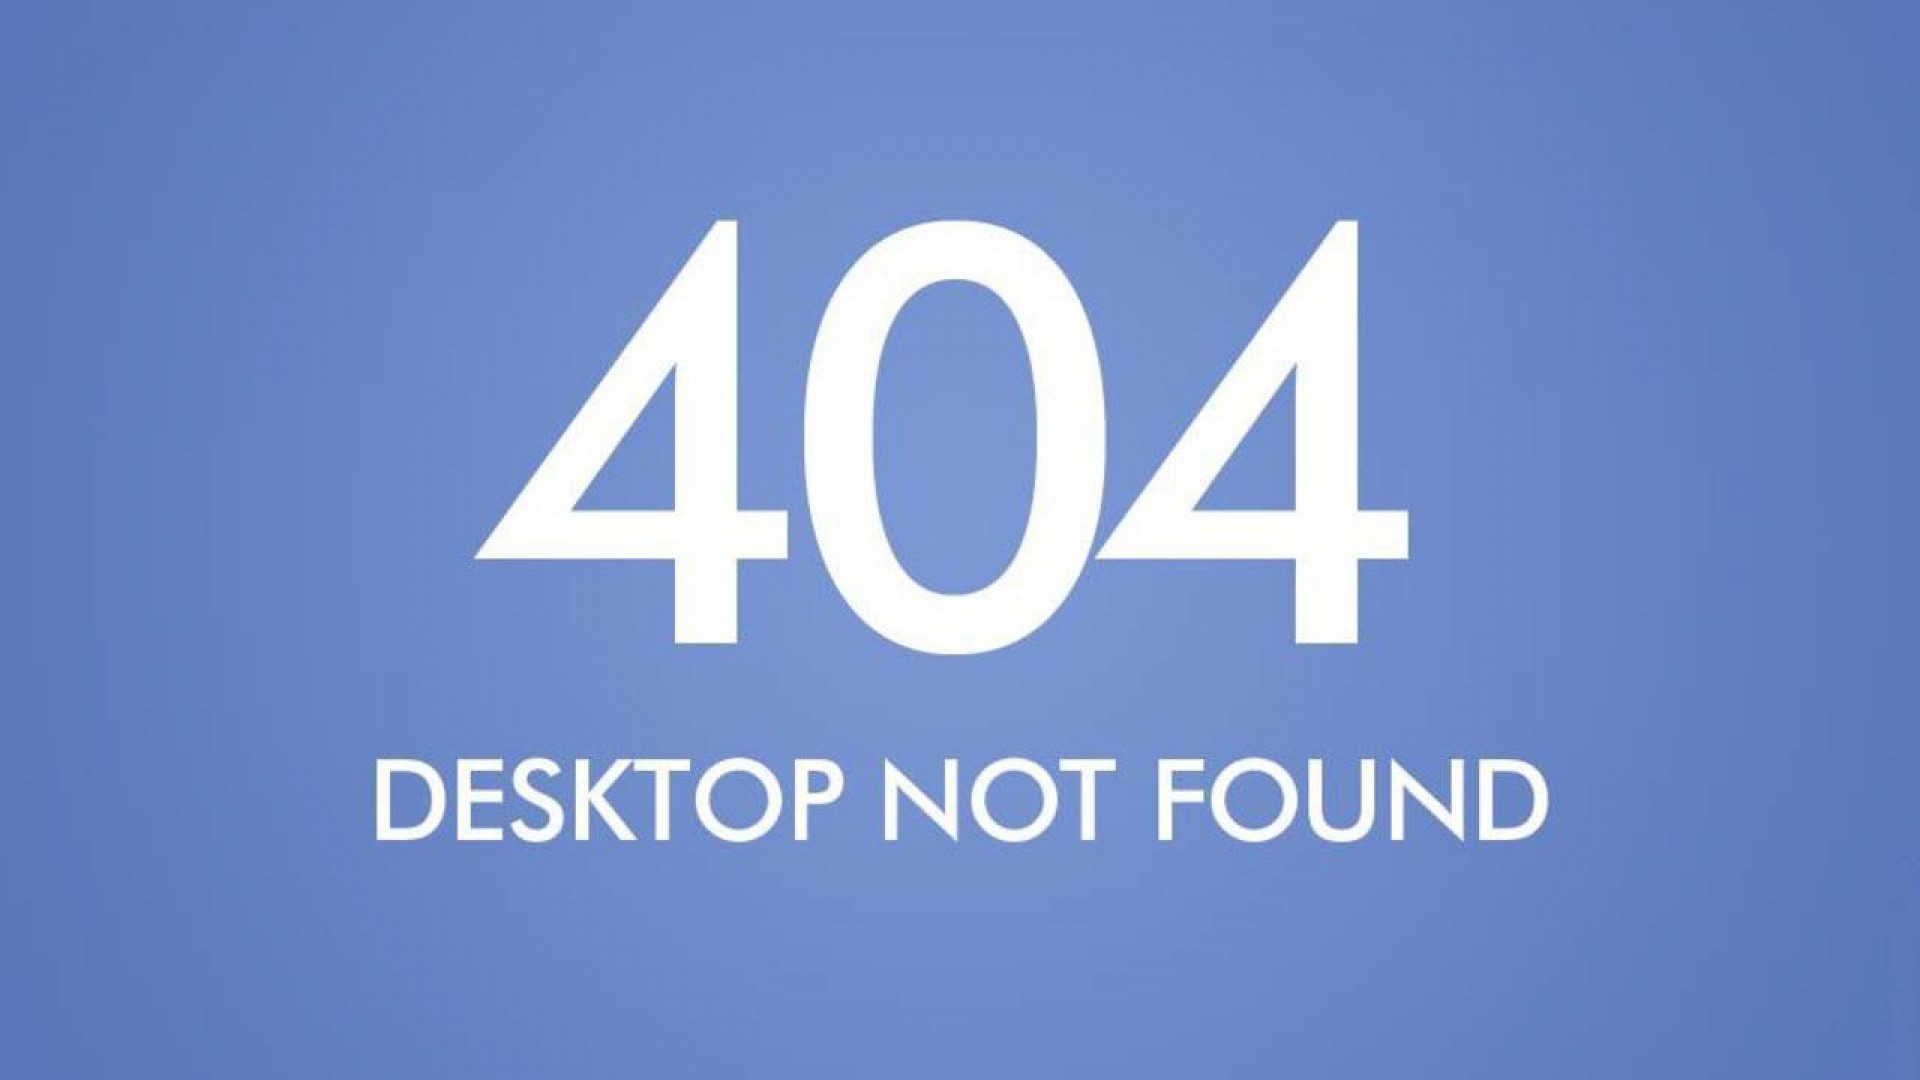 Funny Hd Wallpapers 1080p - 404 Desktop Not Found - HD Wallpaper 